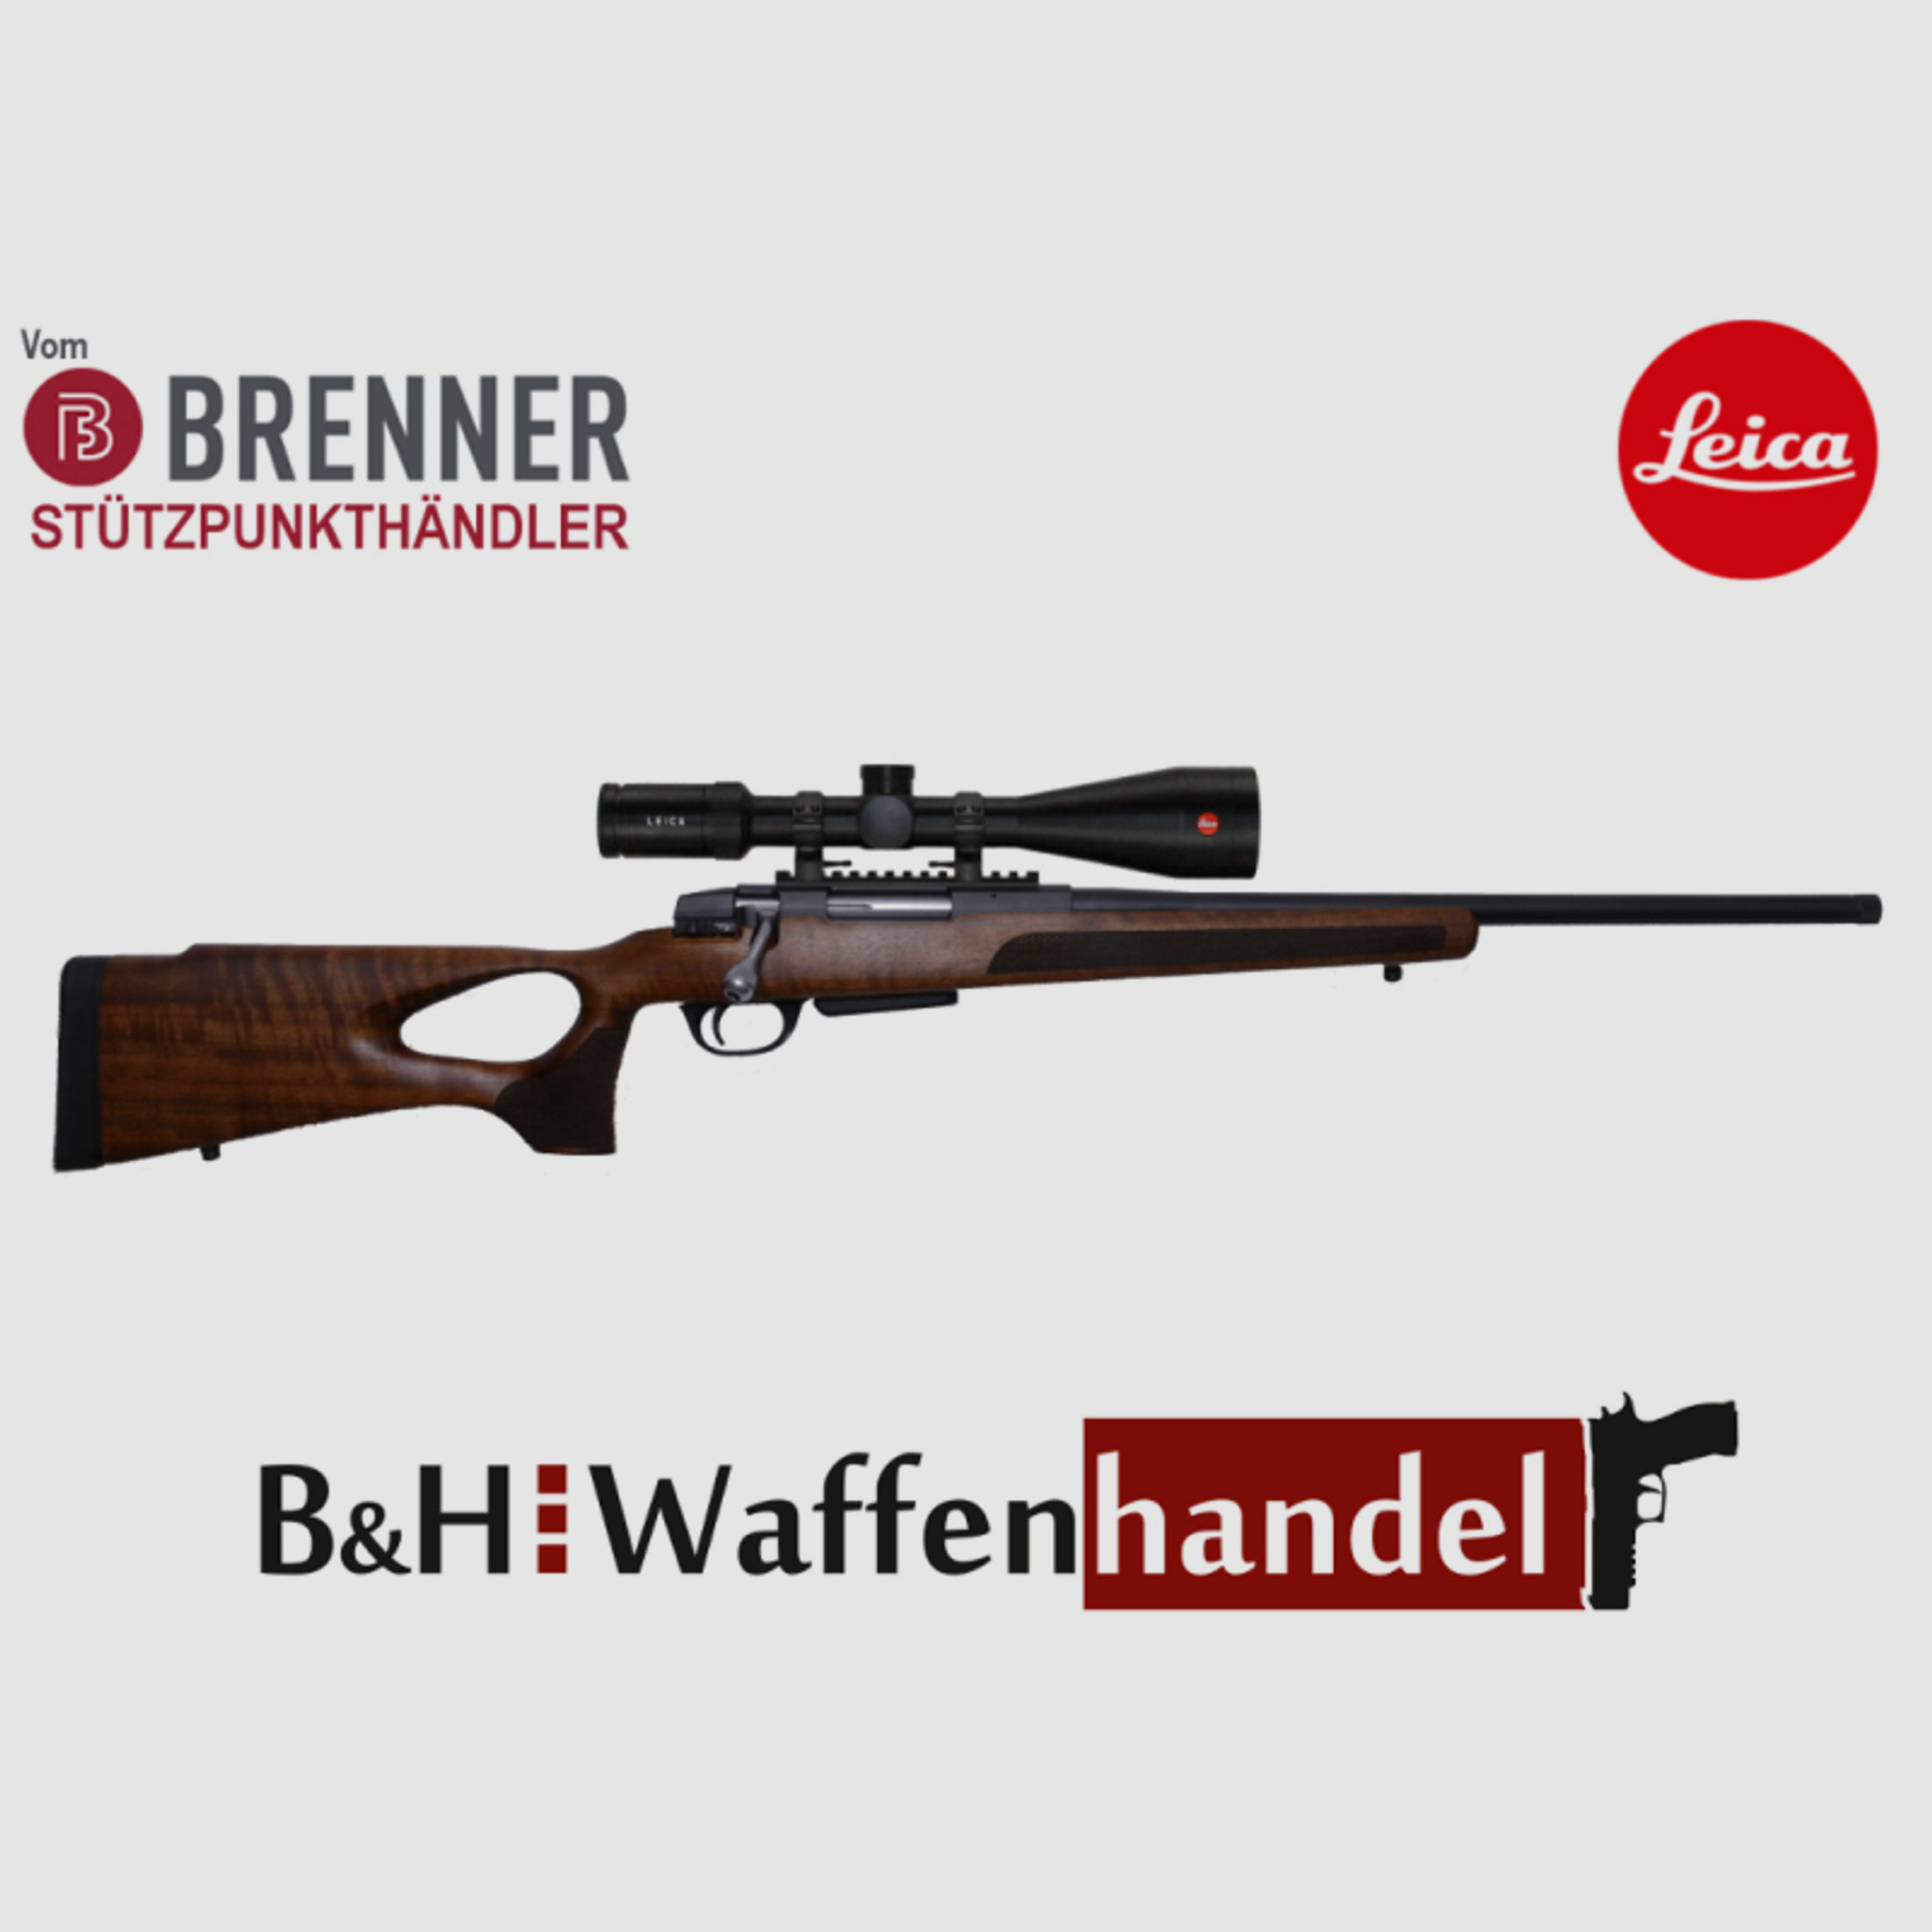 Neuwaffe: Brenner BR 20 Lochschaft Komplettpaket Leica 2.5-15x56 Jagd Büchse Finanzierung möglich